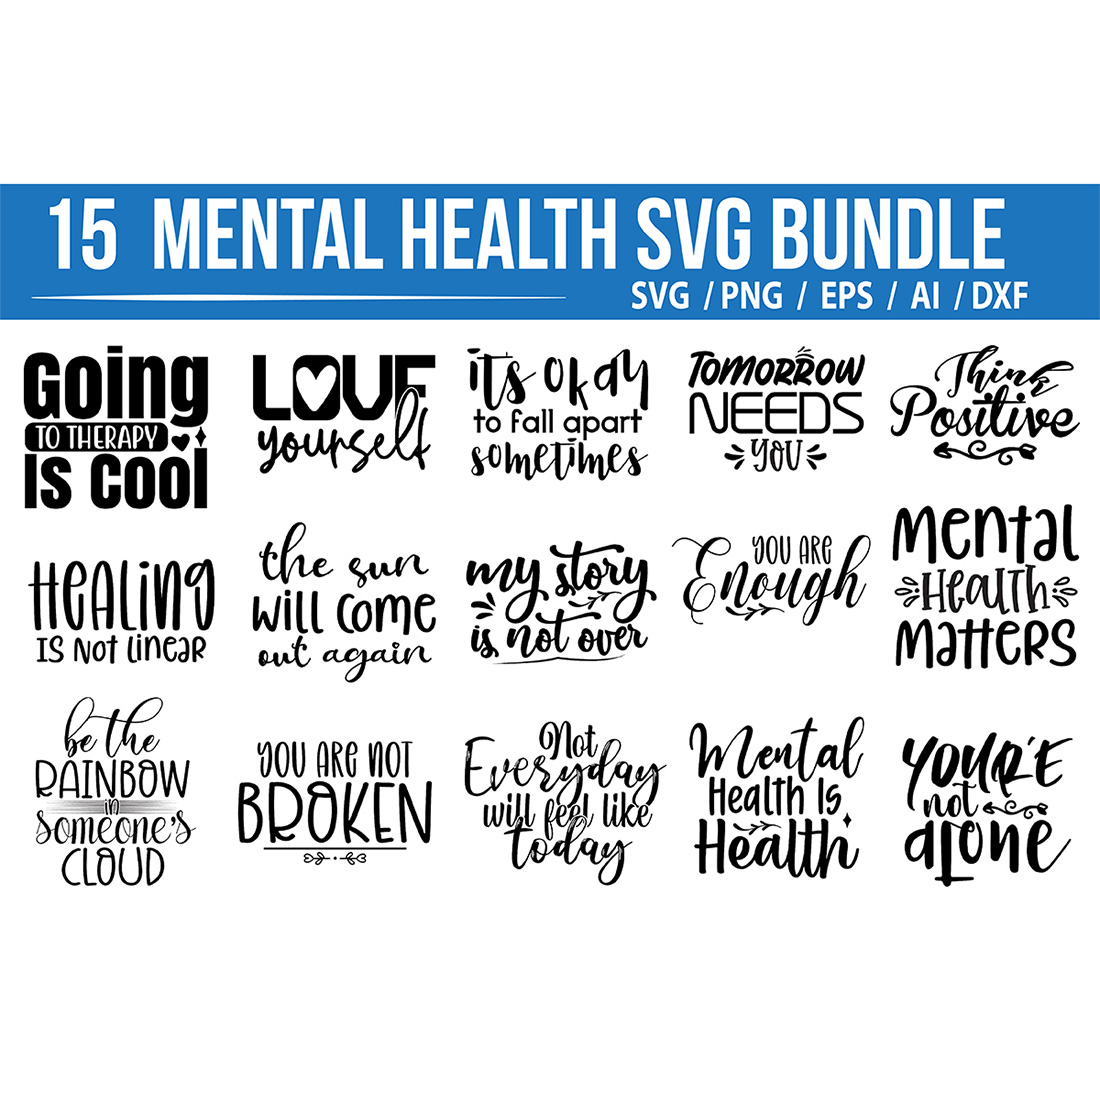 T-shirt Typography Mental Health SVG Design cover image.